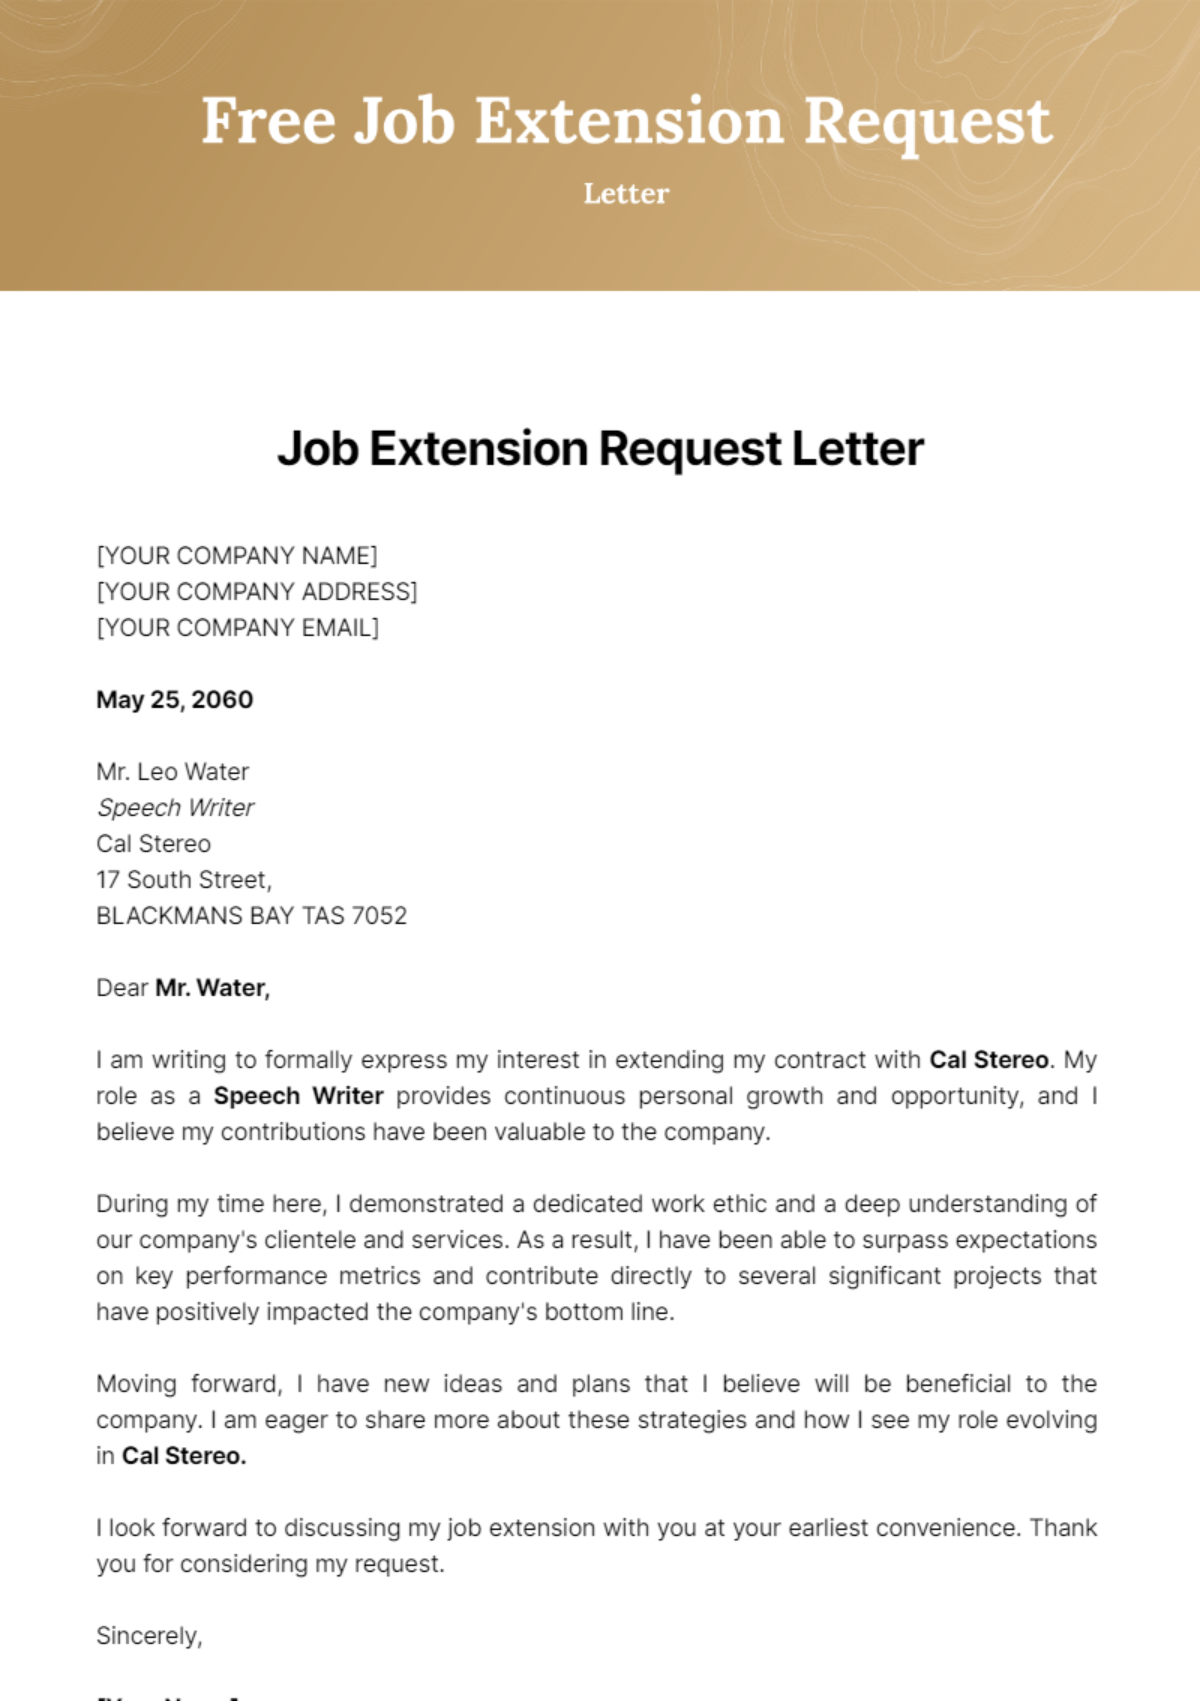 Job Extension Request Letter Template